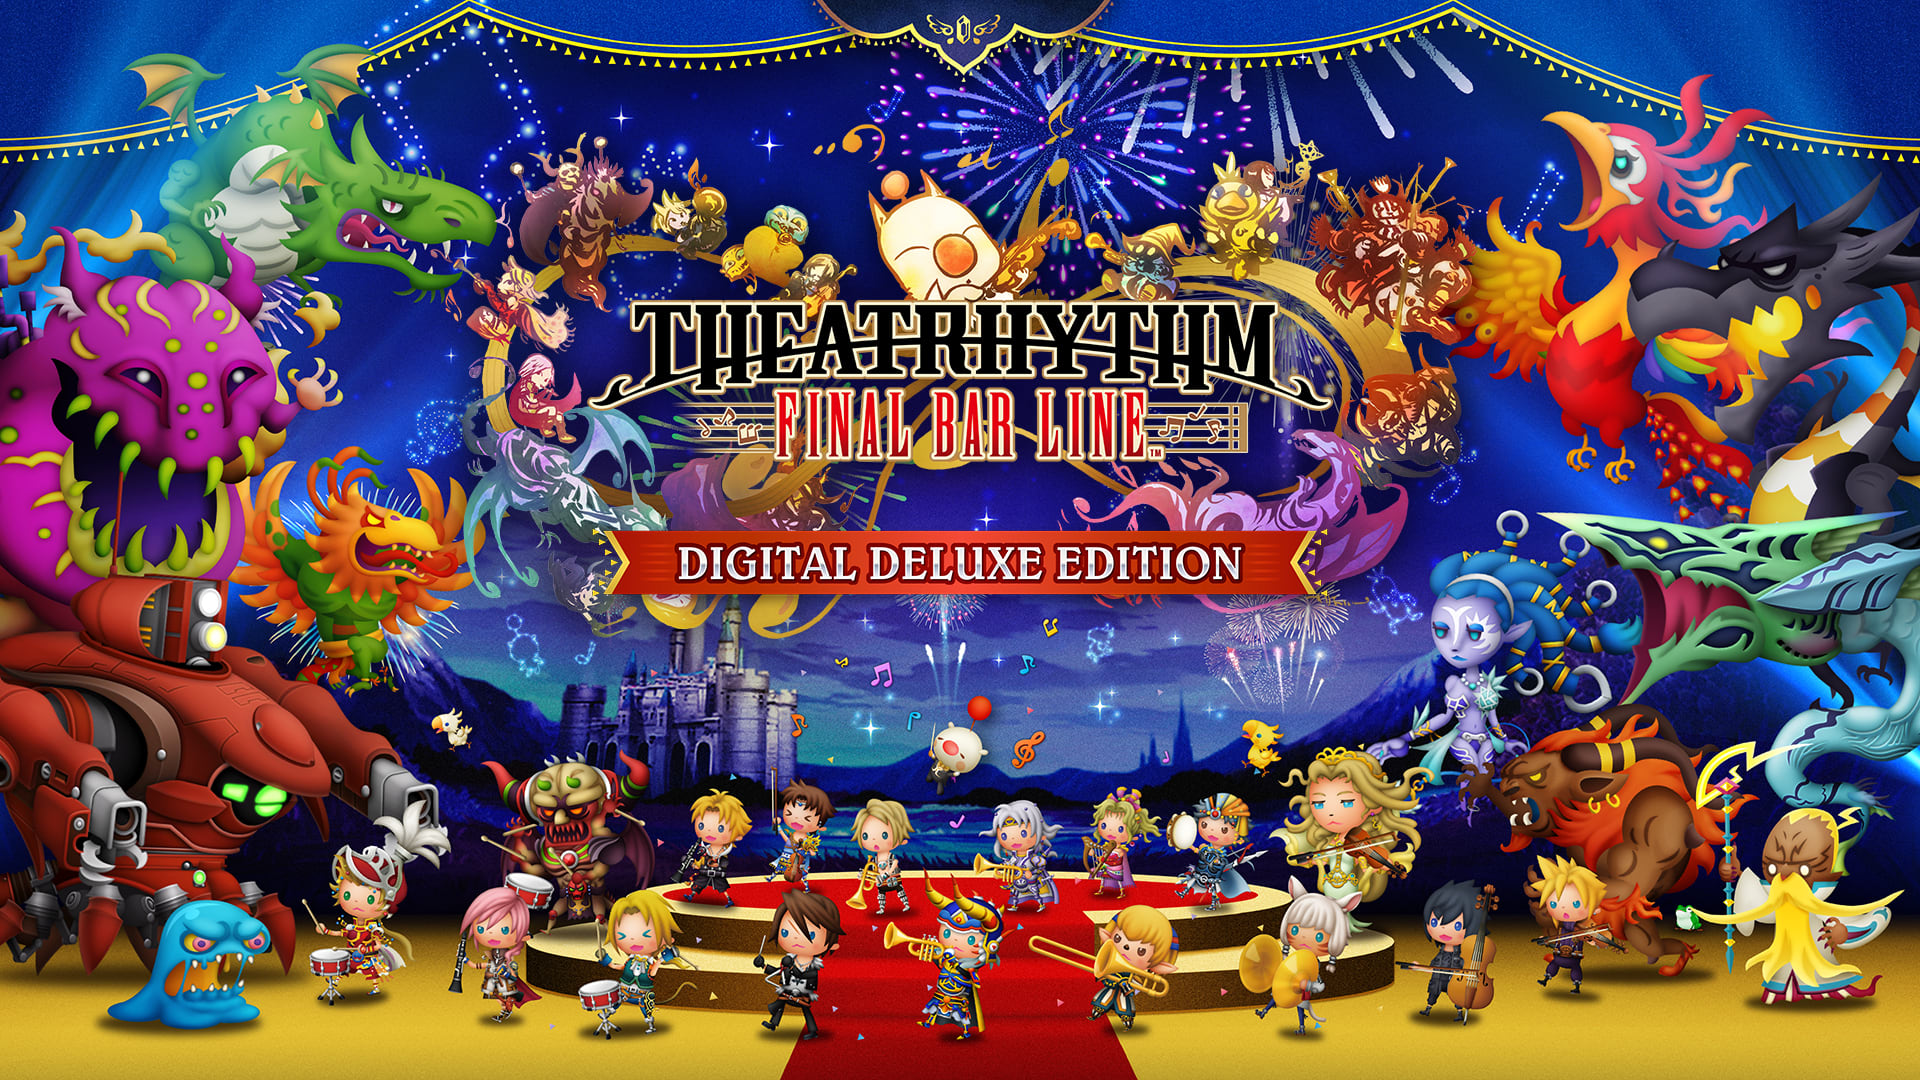 THEATRHYTHM FINAL BAR LINE Digital Deluxe Edition